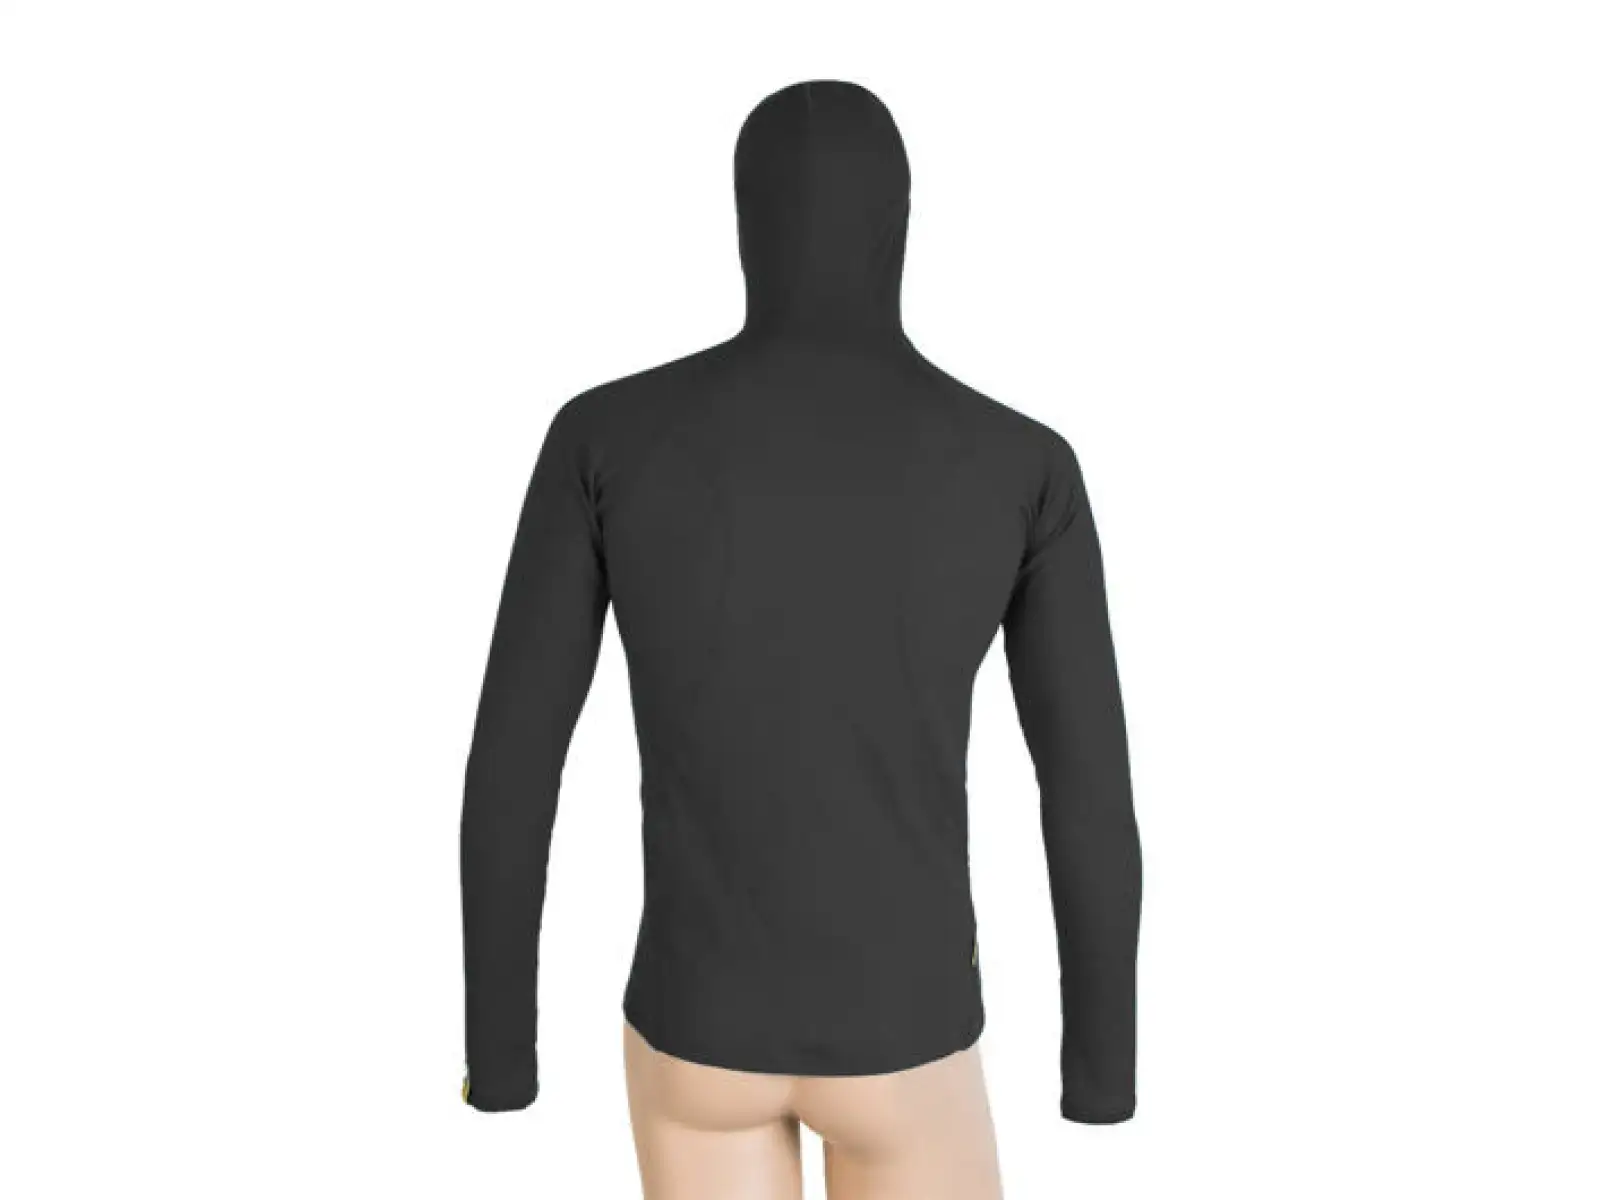 Sensor Merino DF pánské triko s kapucí dlouhý rukáv černá